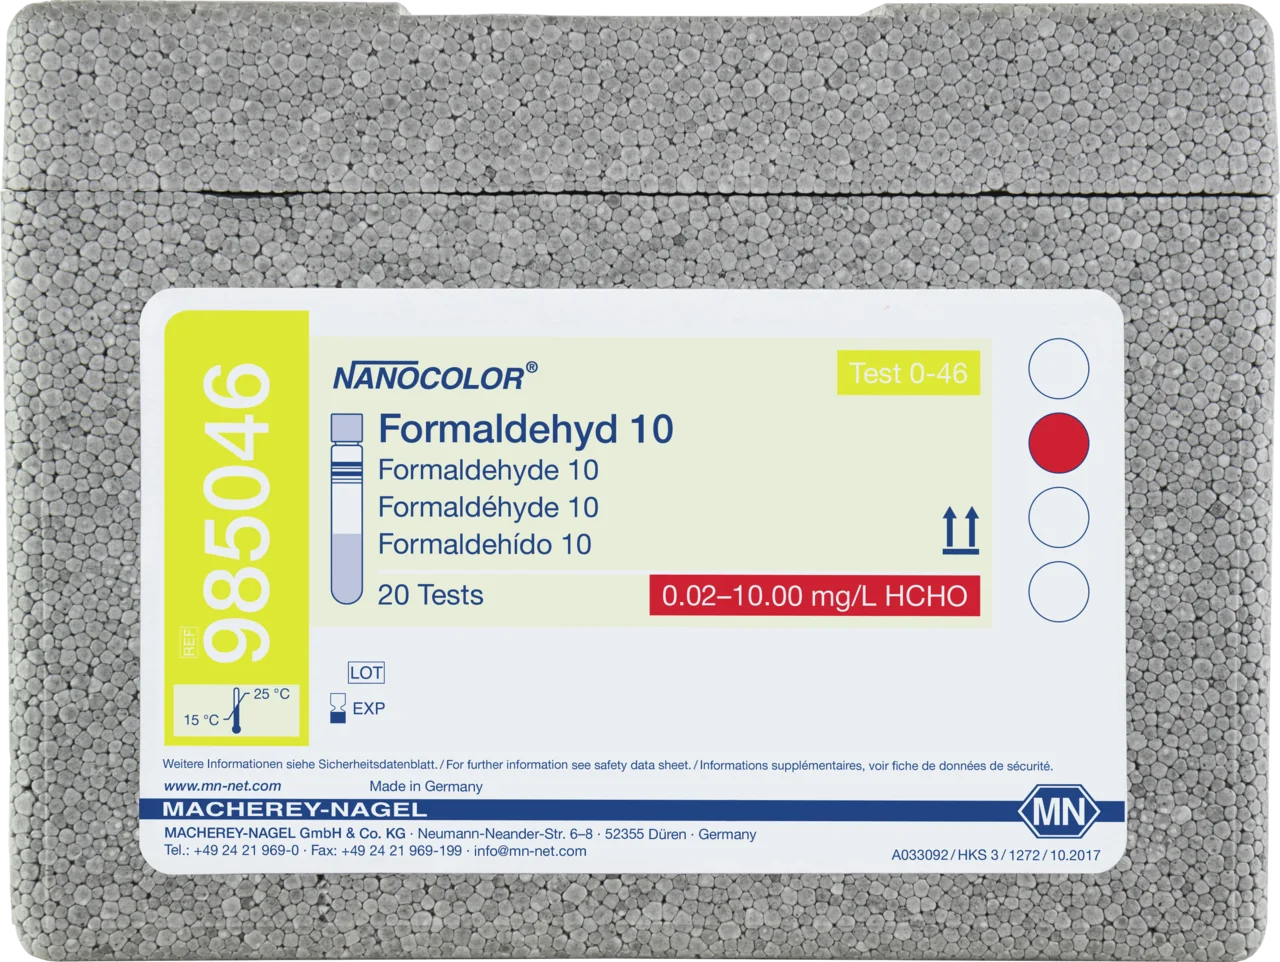 MN 985046 NANOCOLOR formaldehyd 10